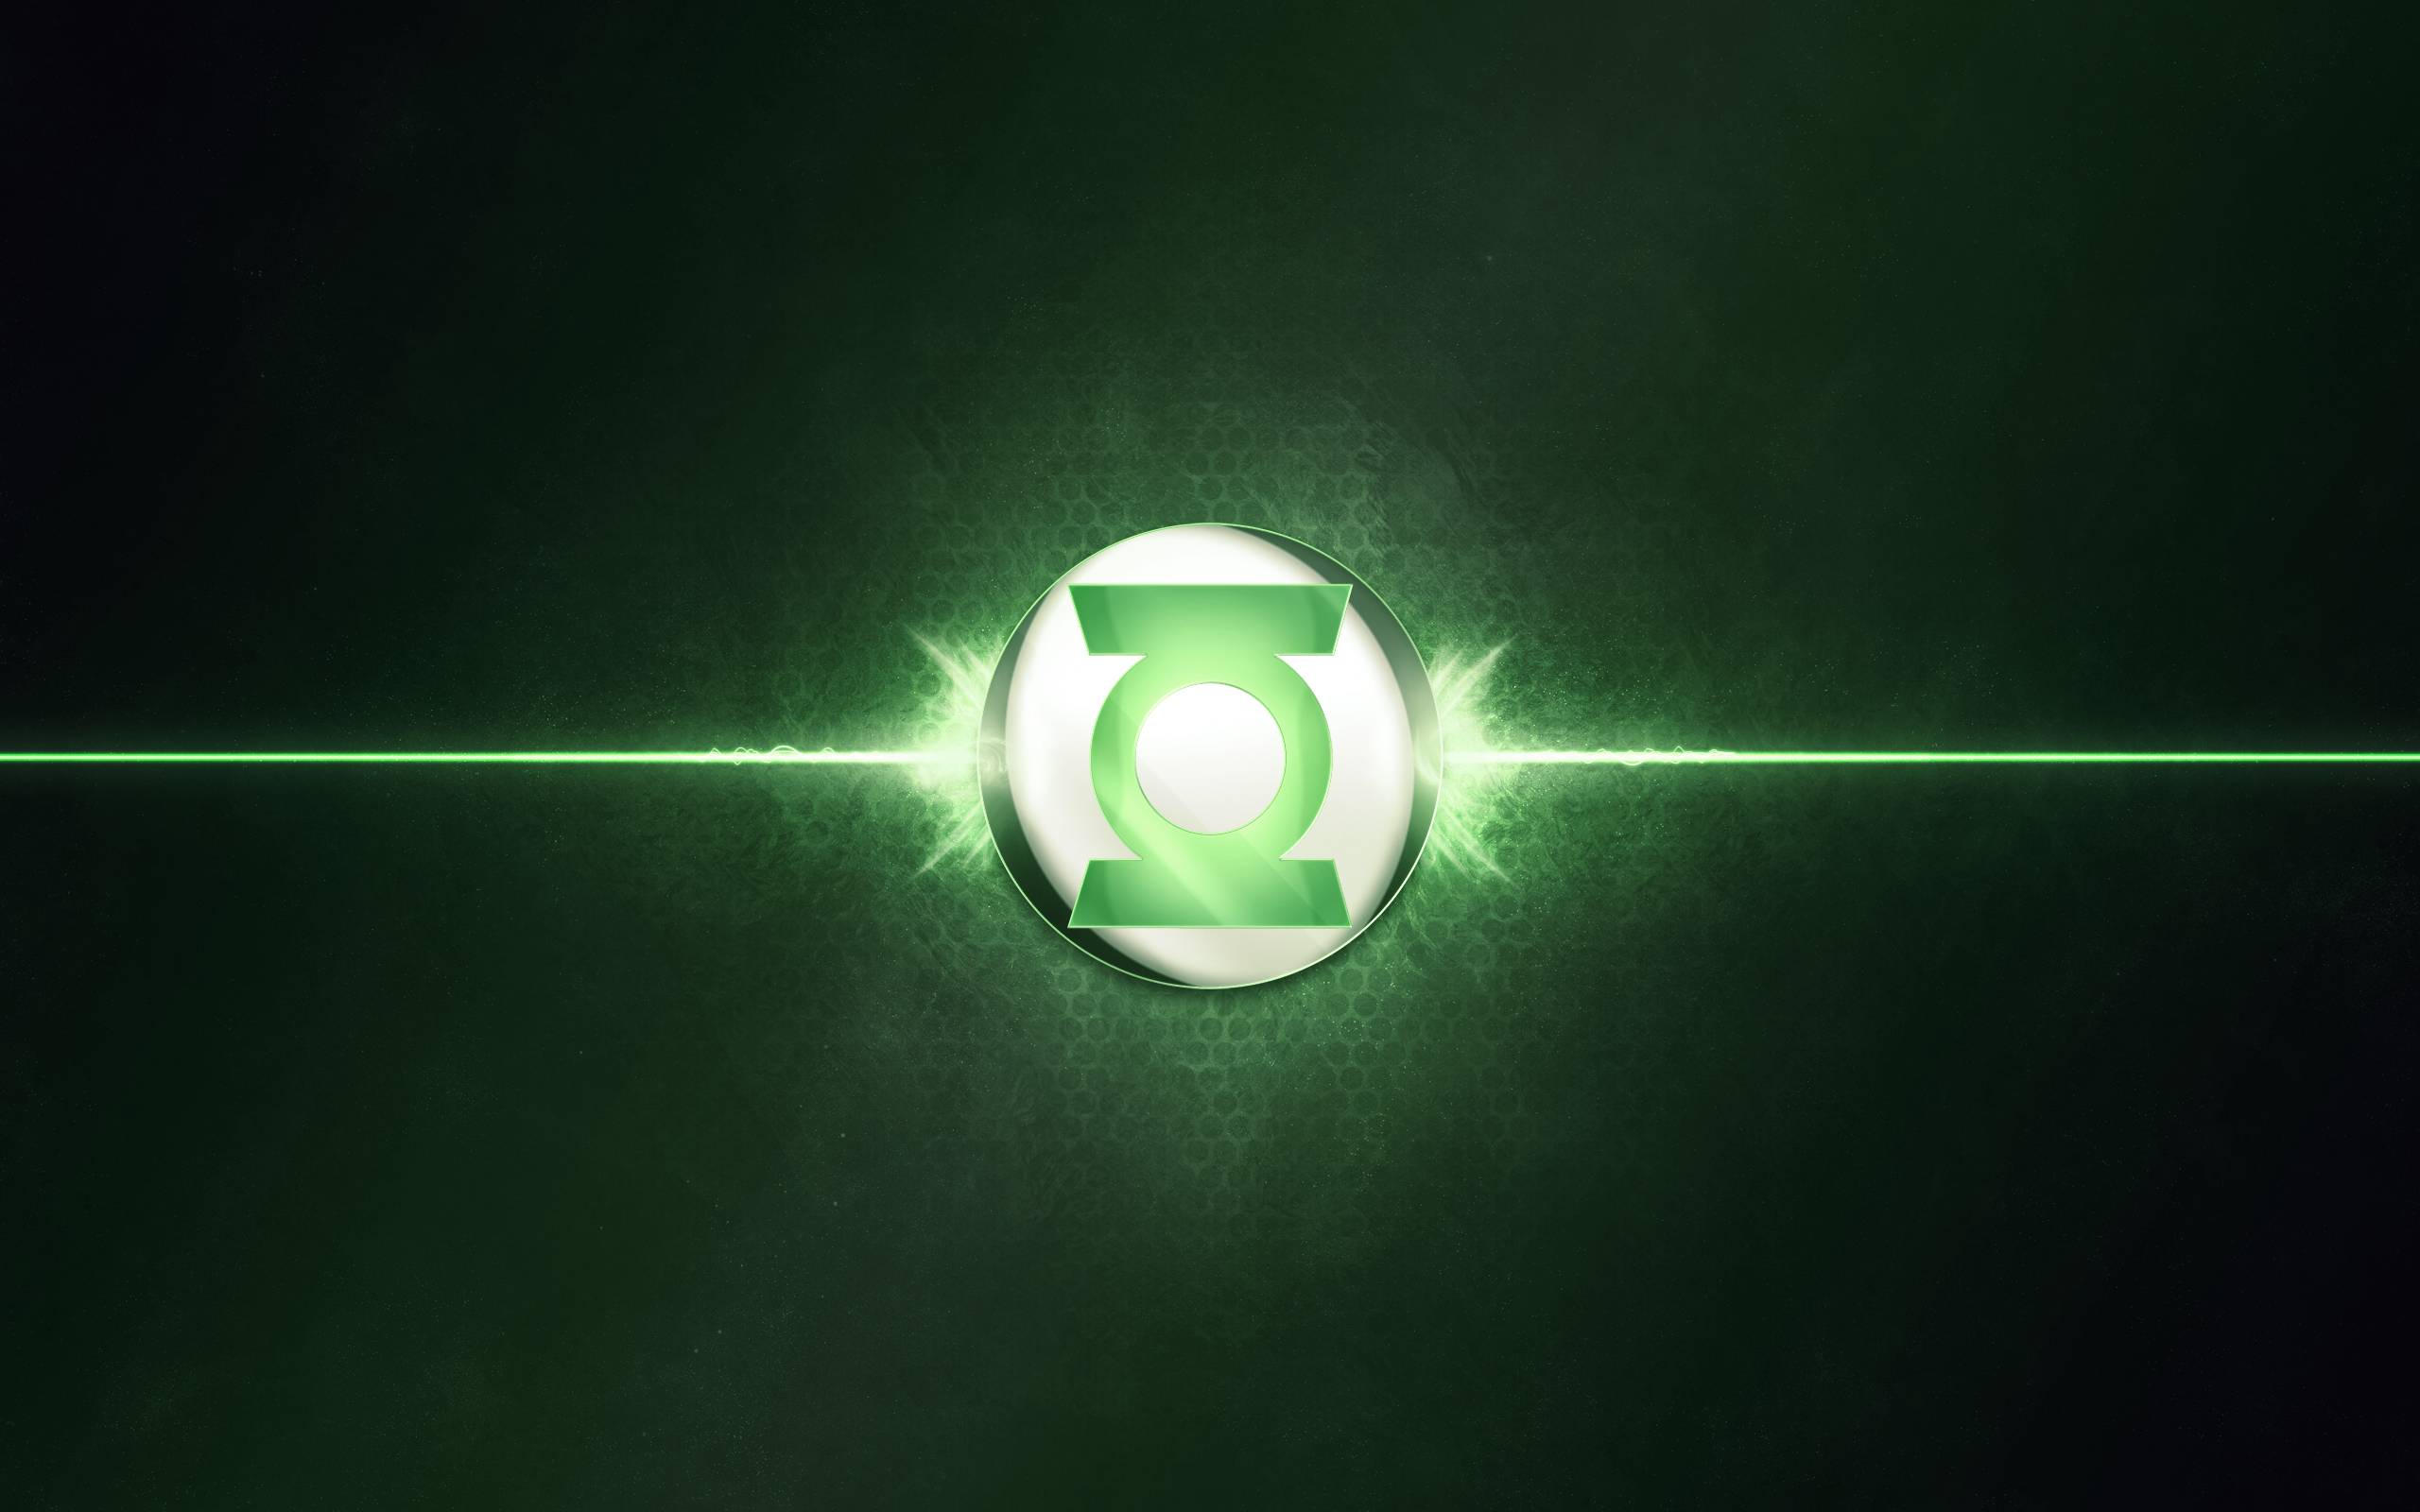 Download Awesome Green Lantern Wallpaper 23541 2560x1600 px High